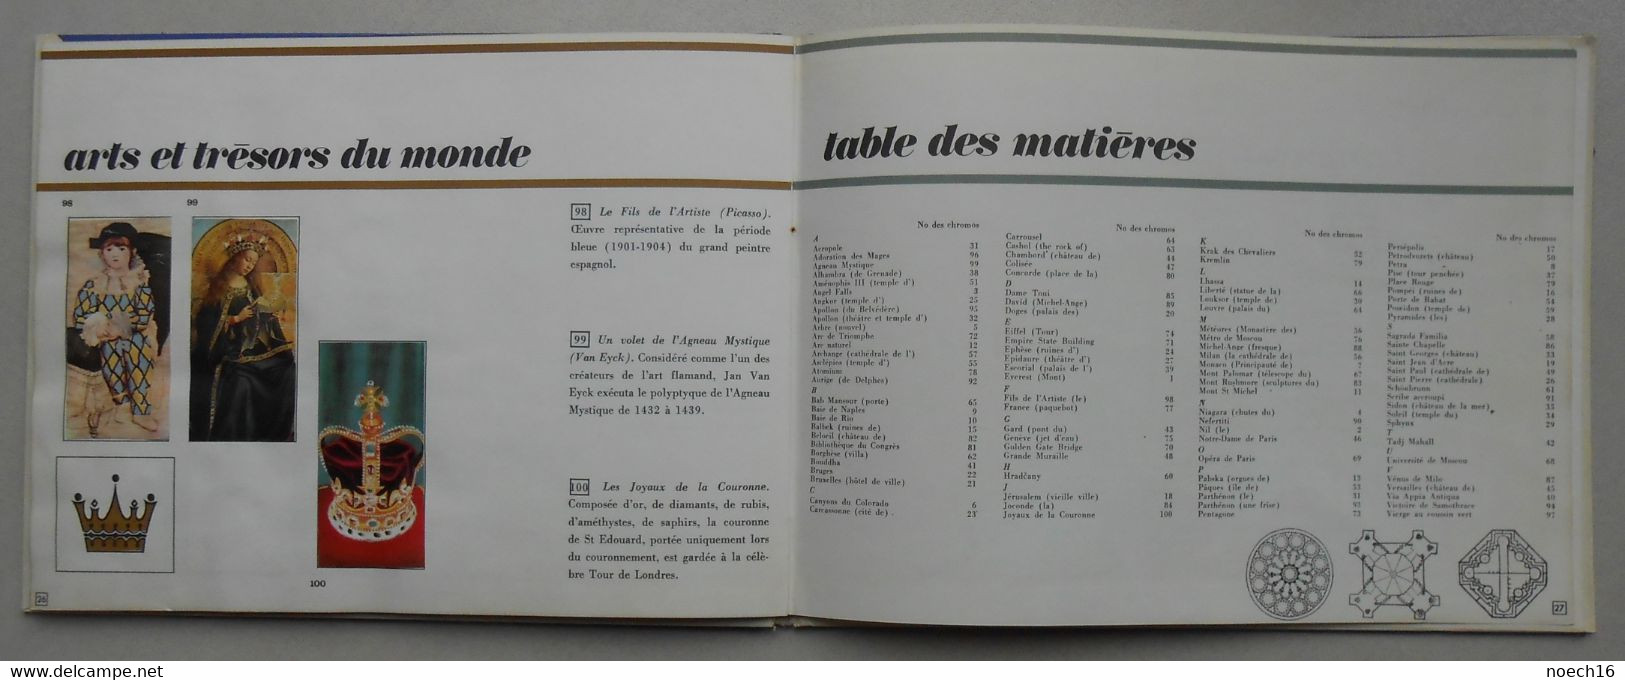 Album Chromos Complet - Les 100 Merveilles du Monde - Timbre Tintin, Ed. du Lombard